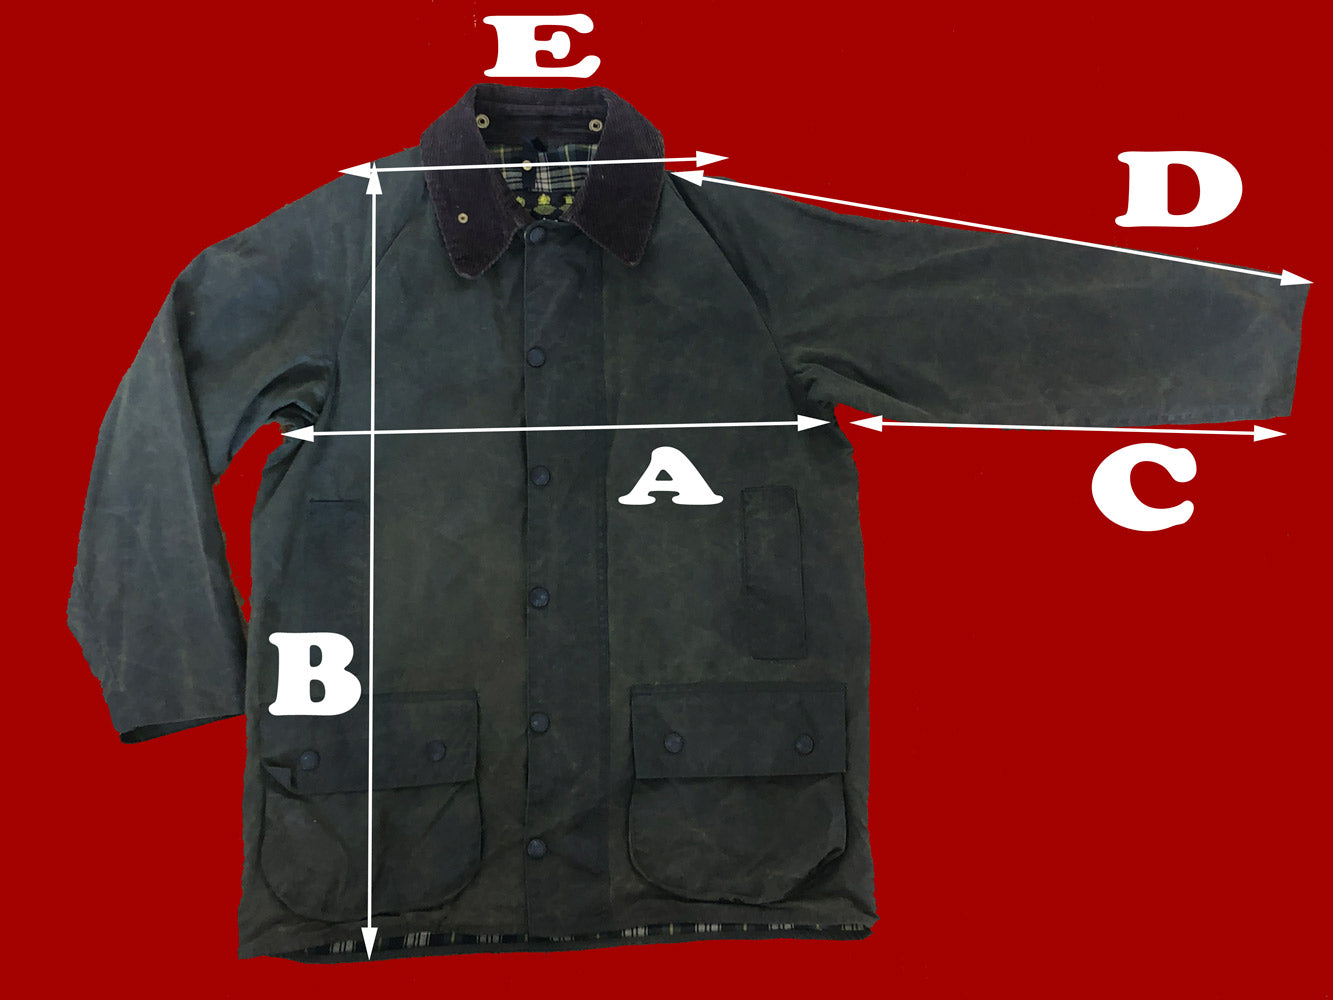 Piumino Barbour verde recente Cromer Jacket XXL-Olive Cromer Hooded Jacket size XXL